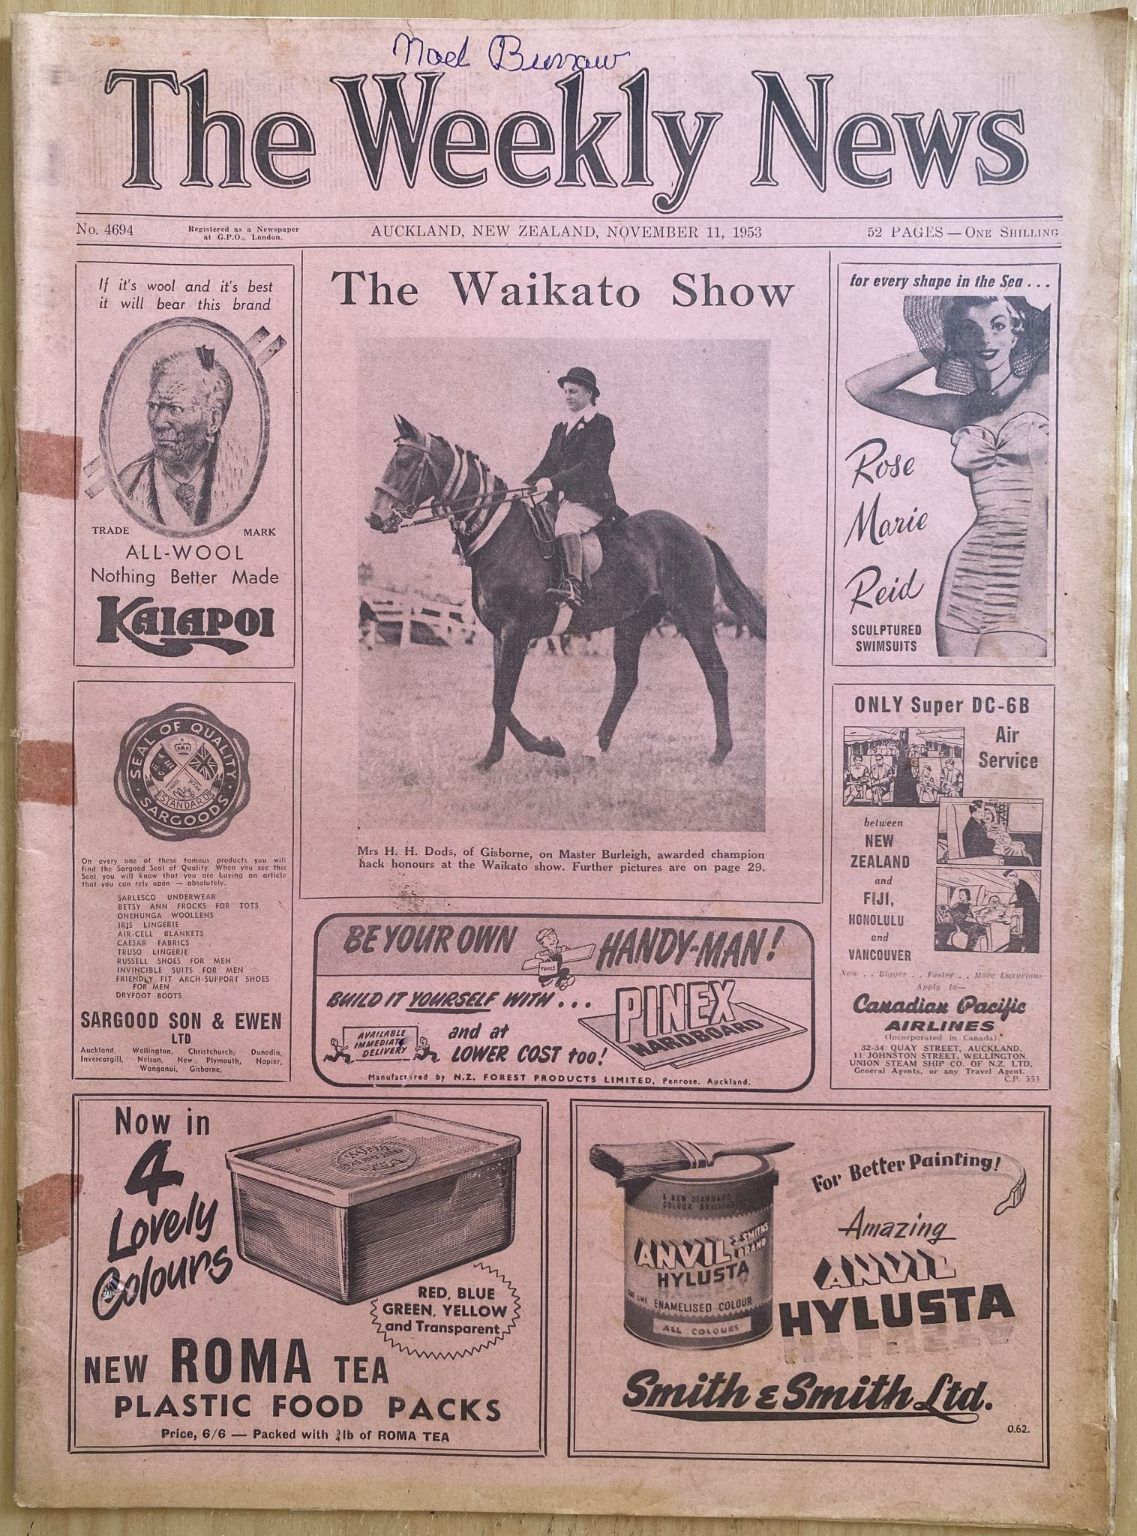 OLD NEWSPAPER: The Weekly News - No. 4694, 11 November 1953